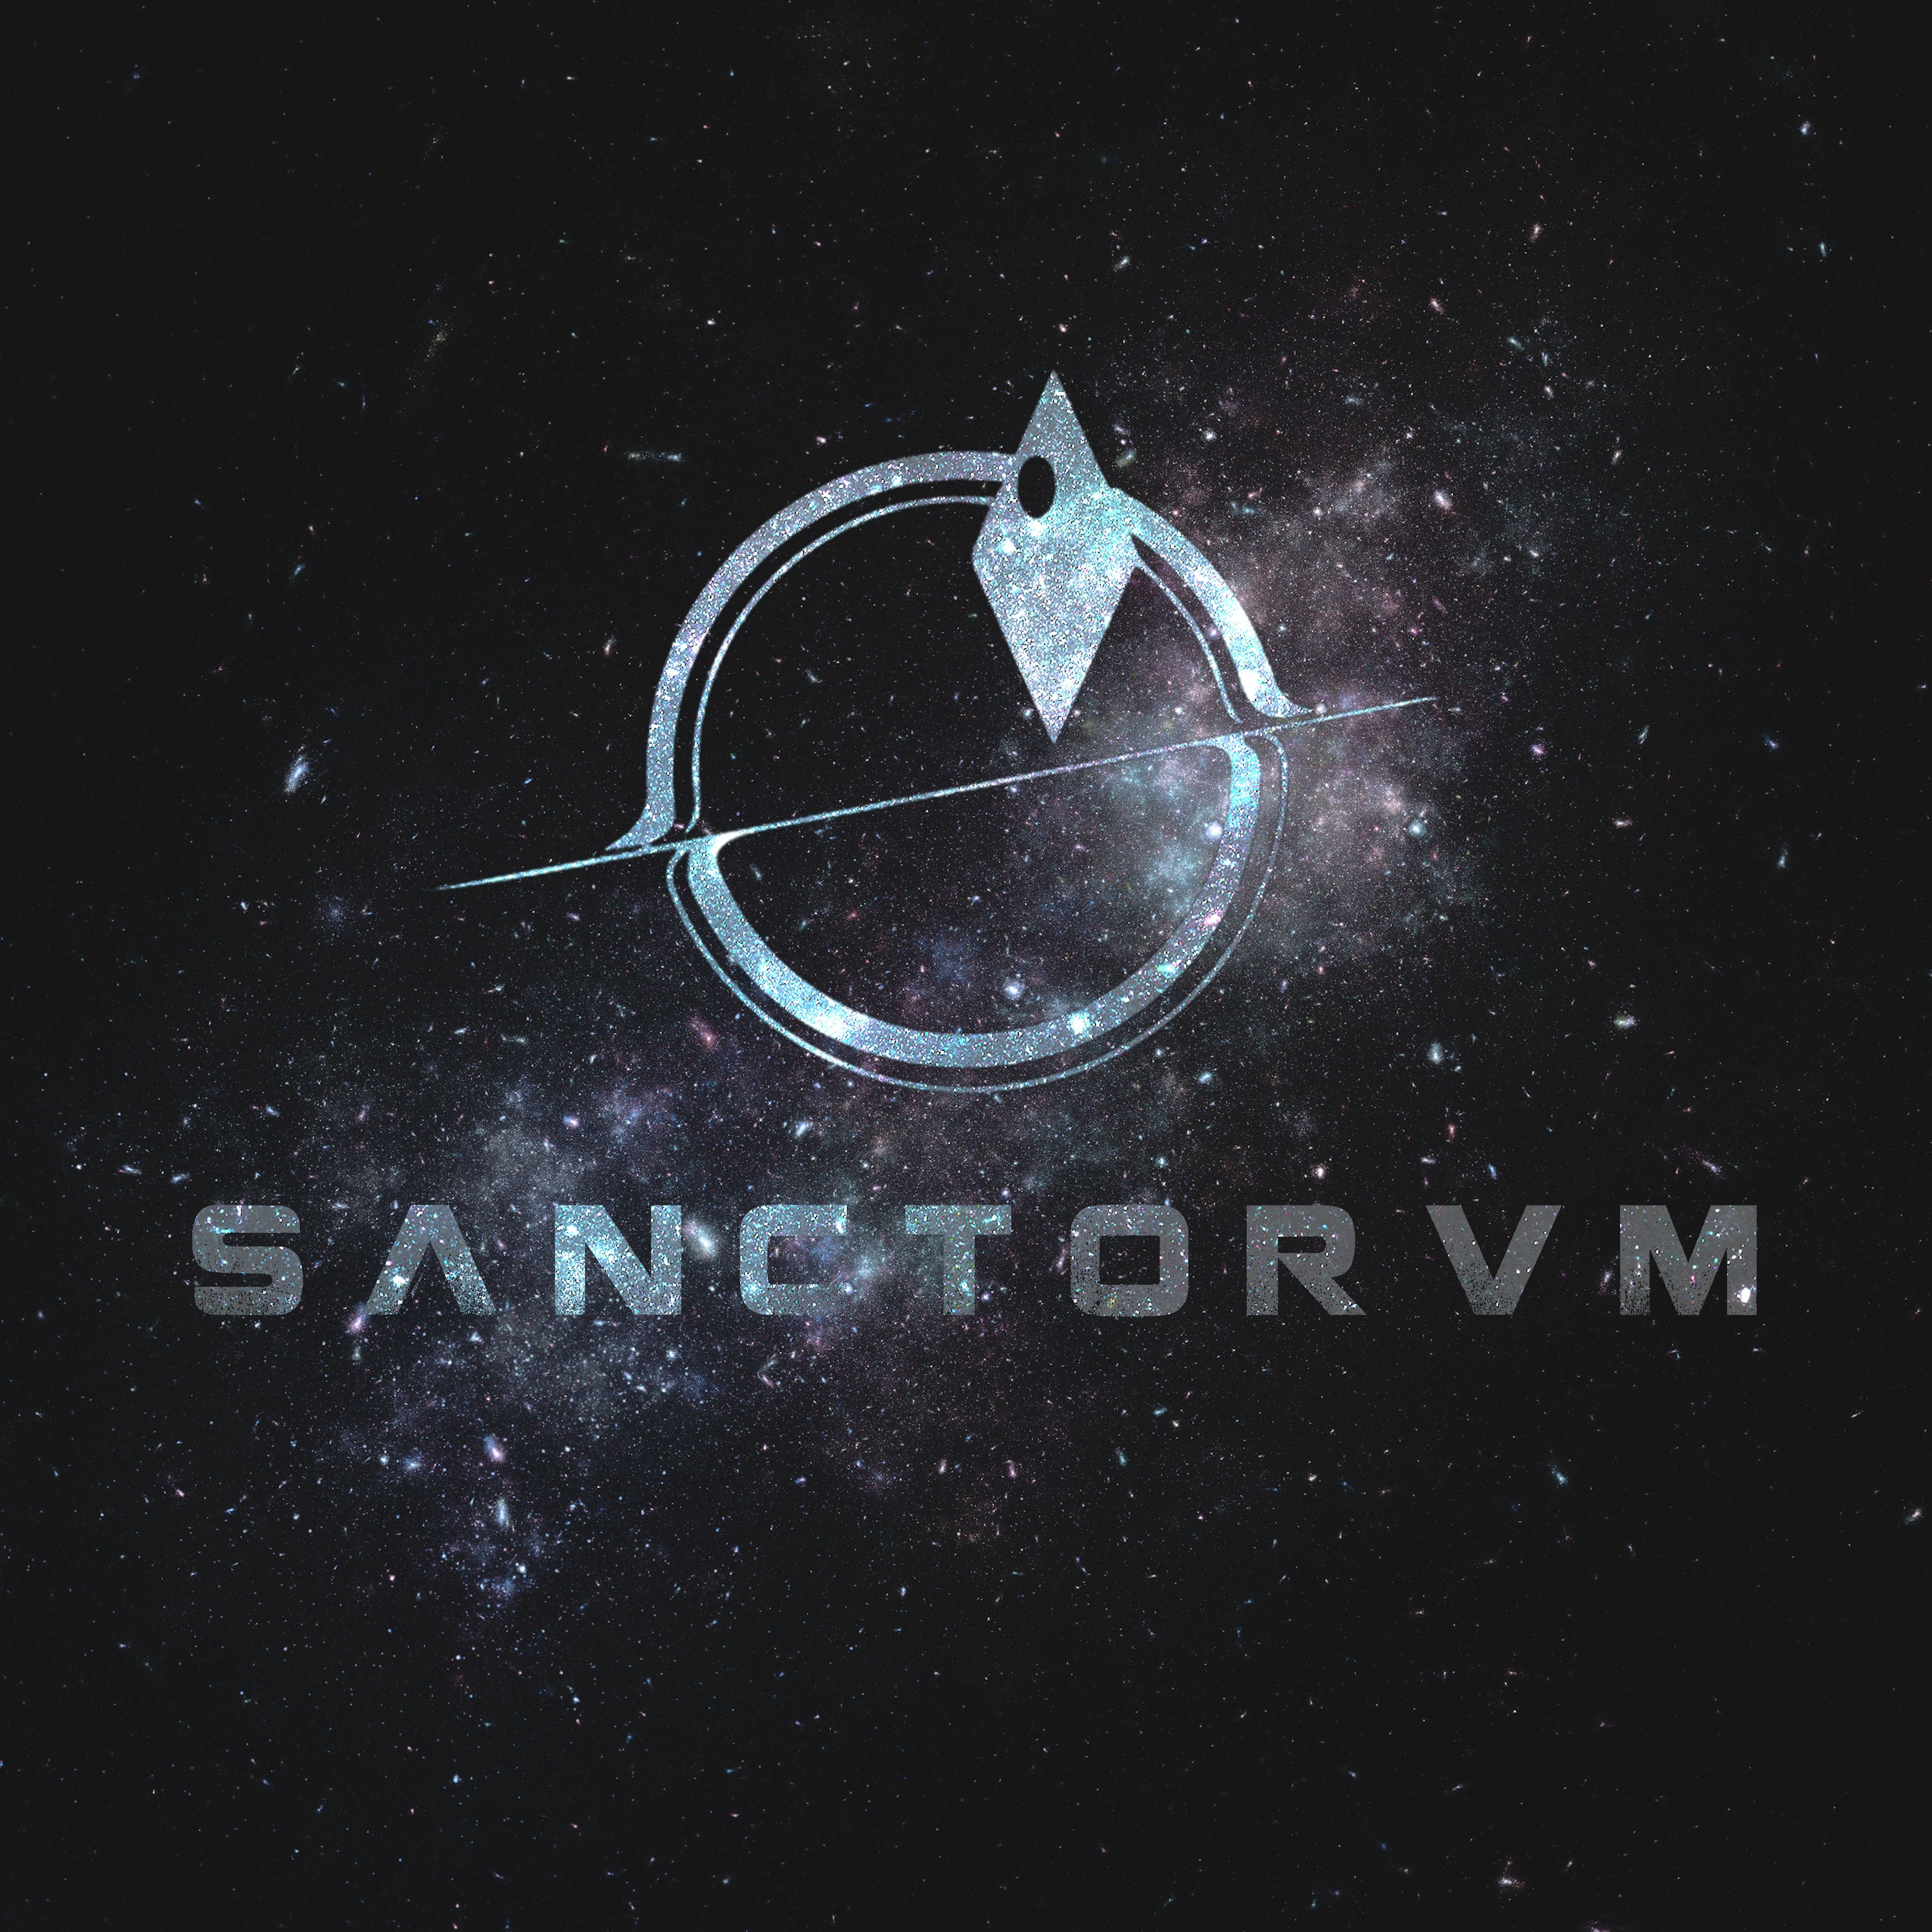 Sanctorvm: The Board Game